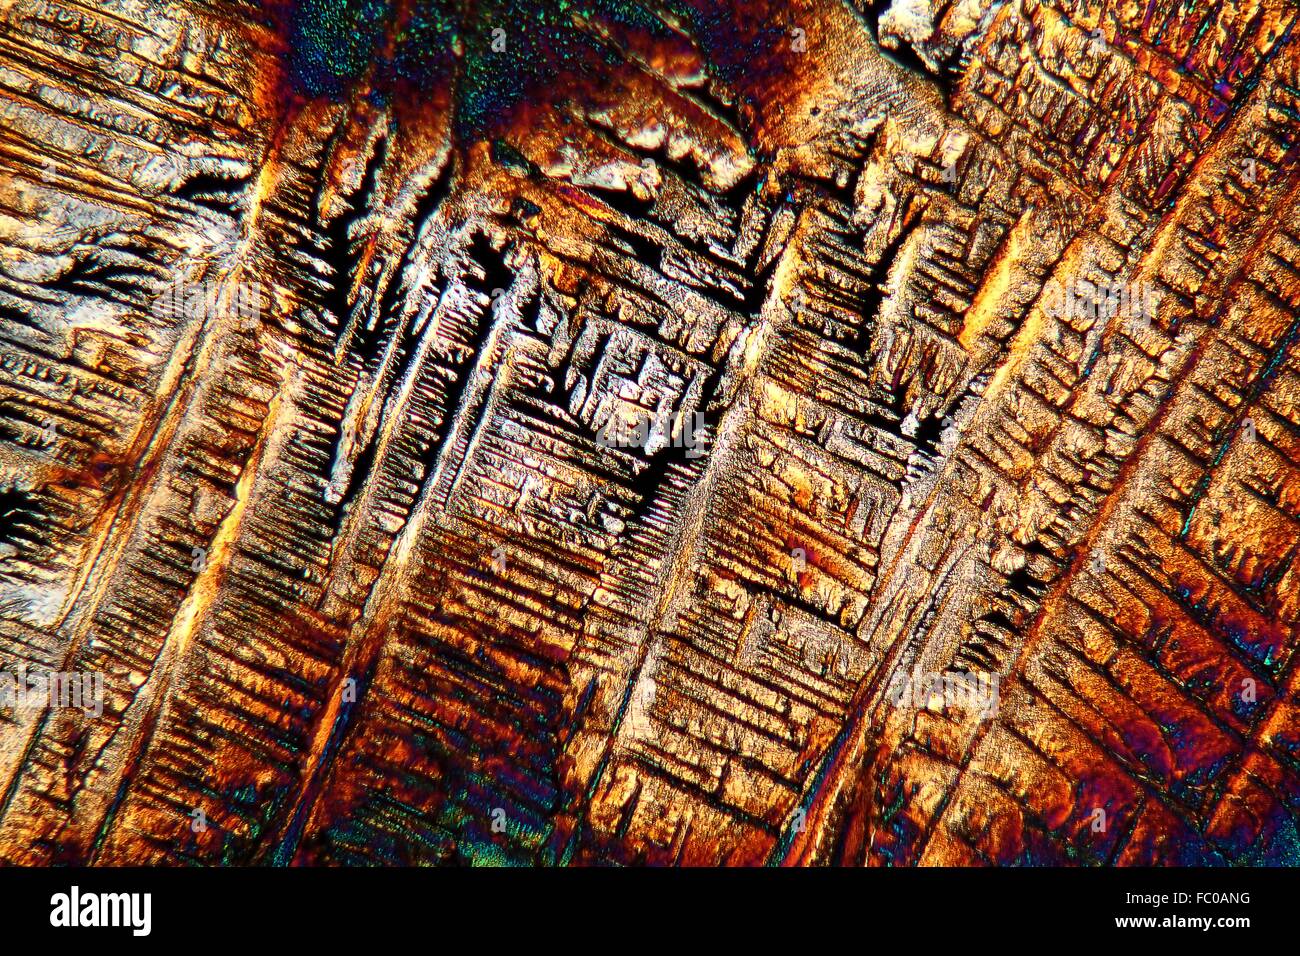 Crystals of Paracetamol under the microscope. Stock Photo